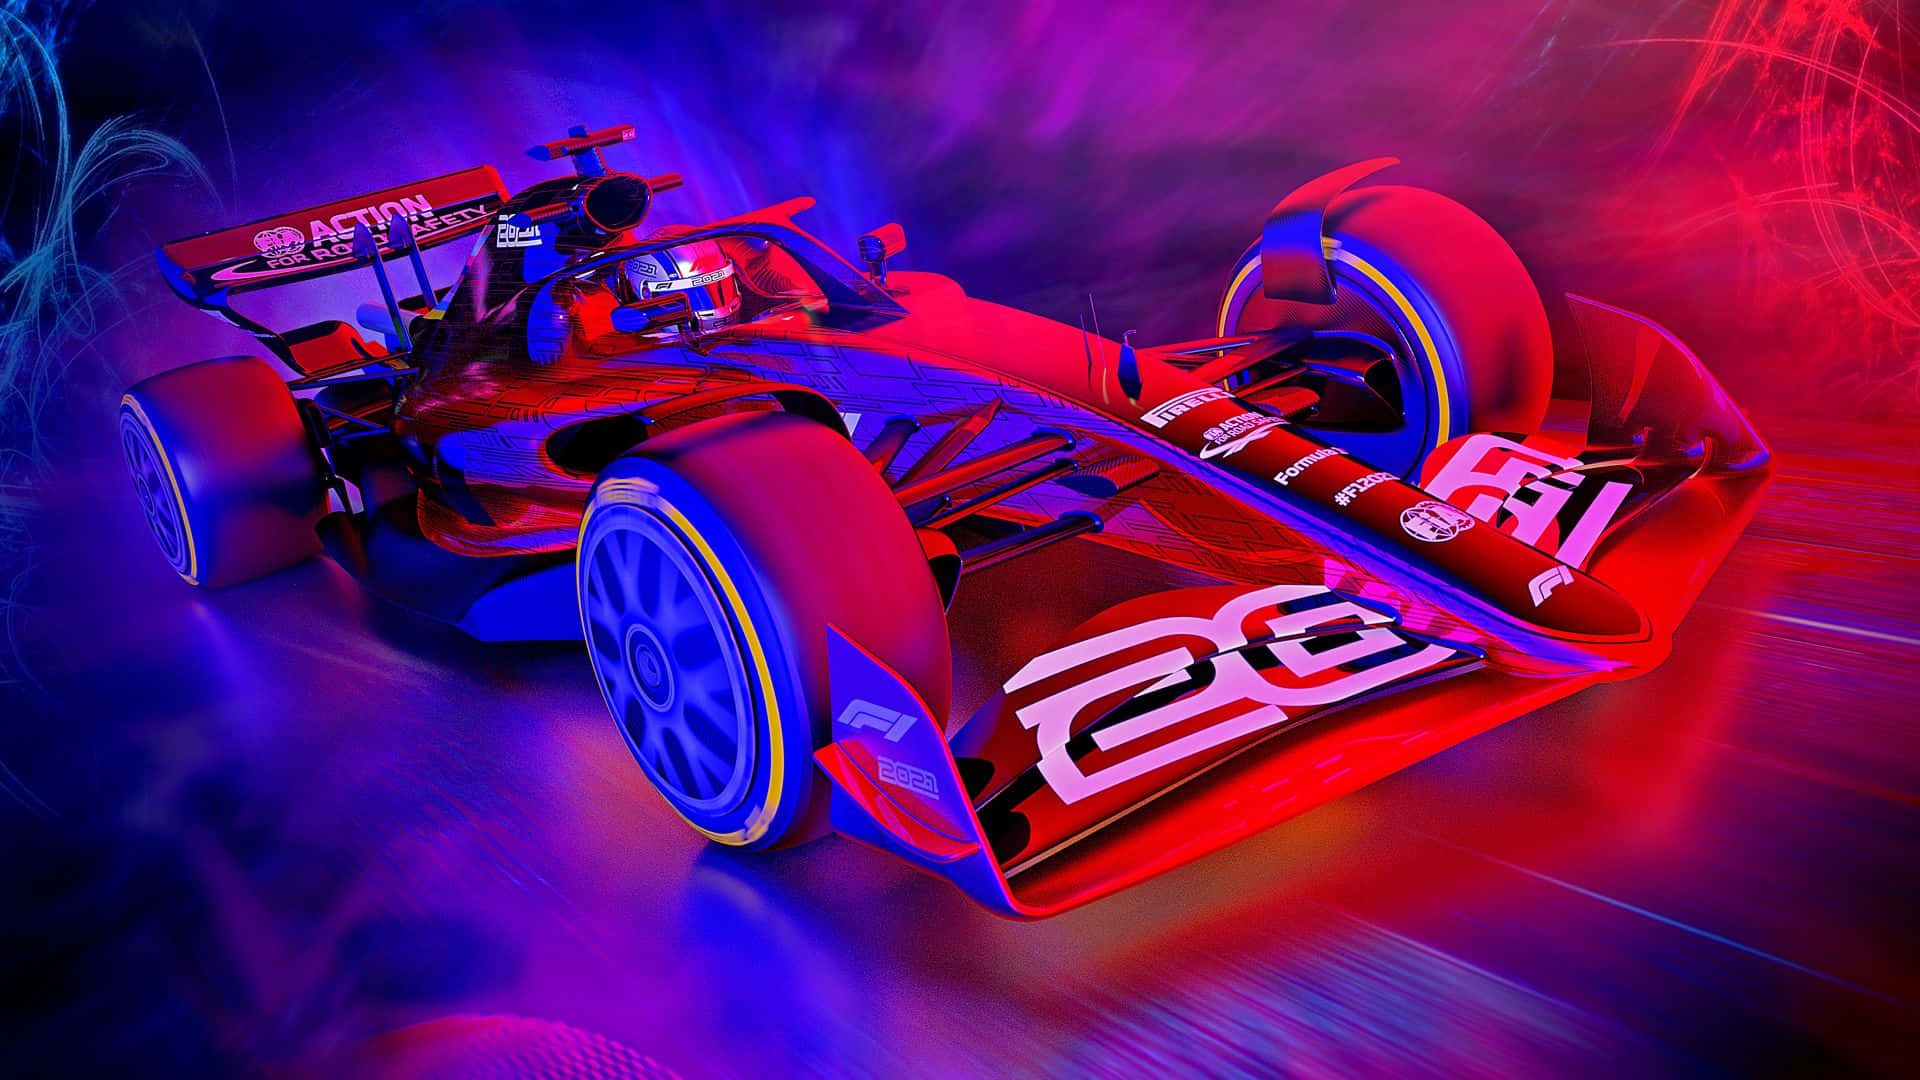 F1-spilracebil lilla og rød æstetisk Wallpaper